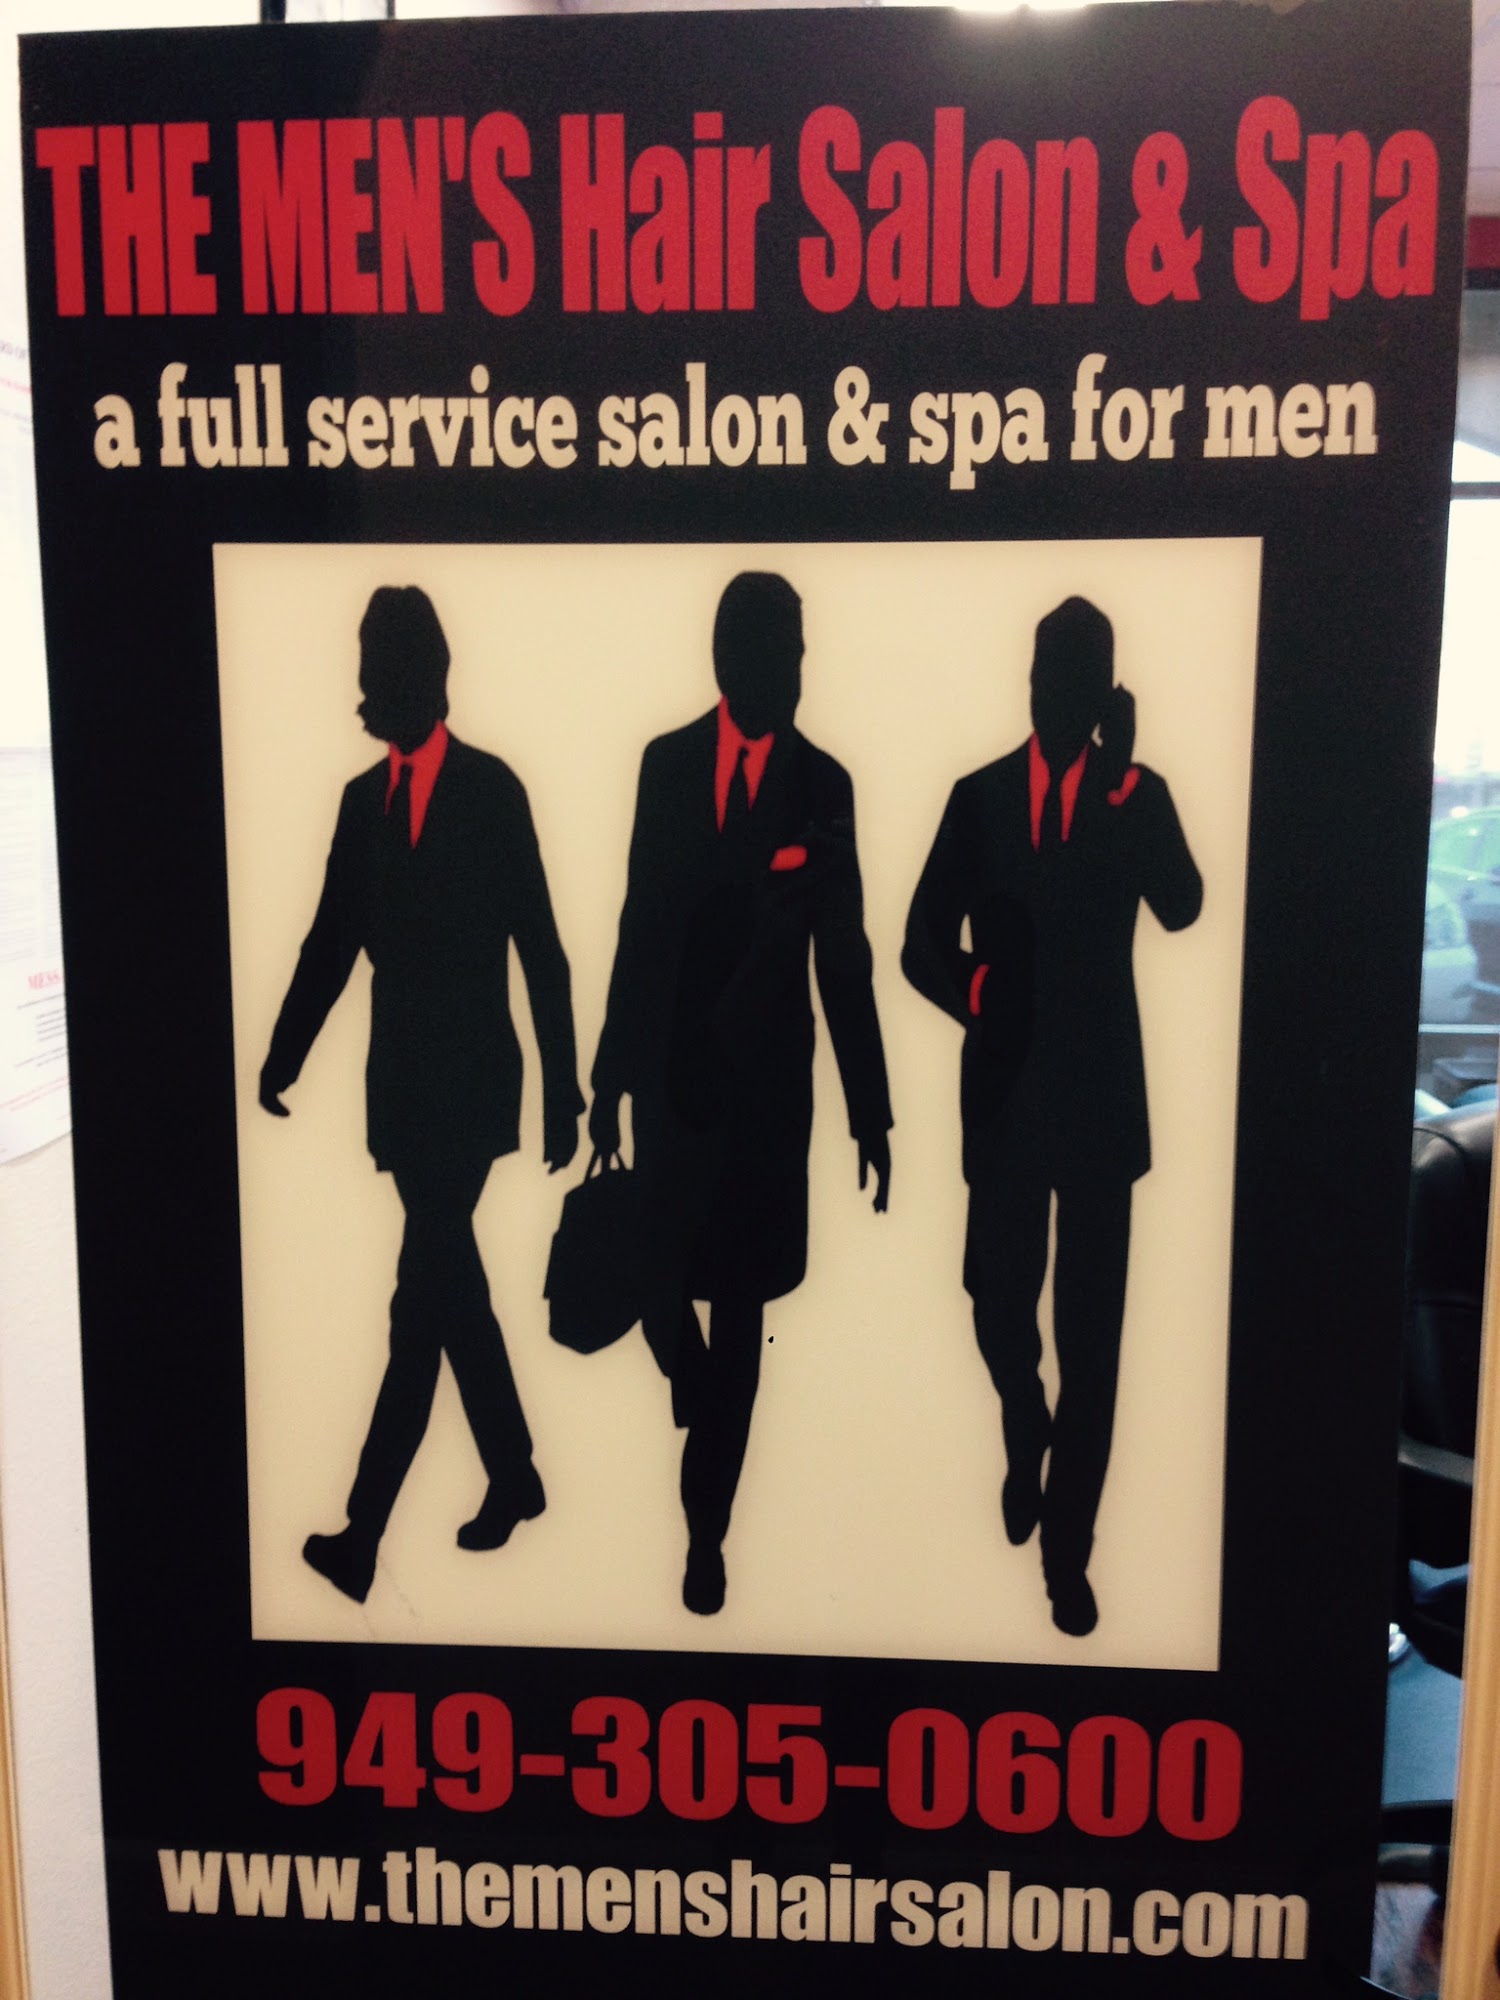 THE MEN'S Hair Salon & Spa